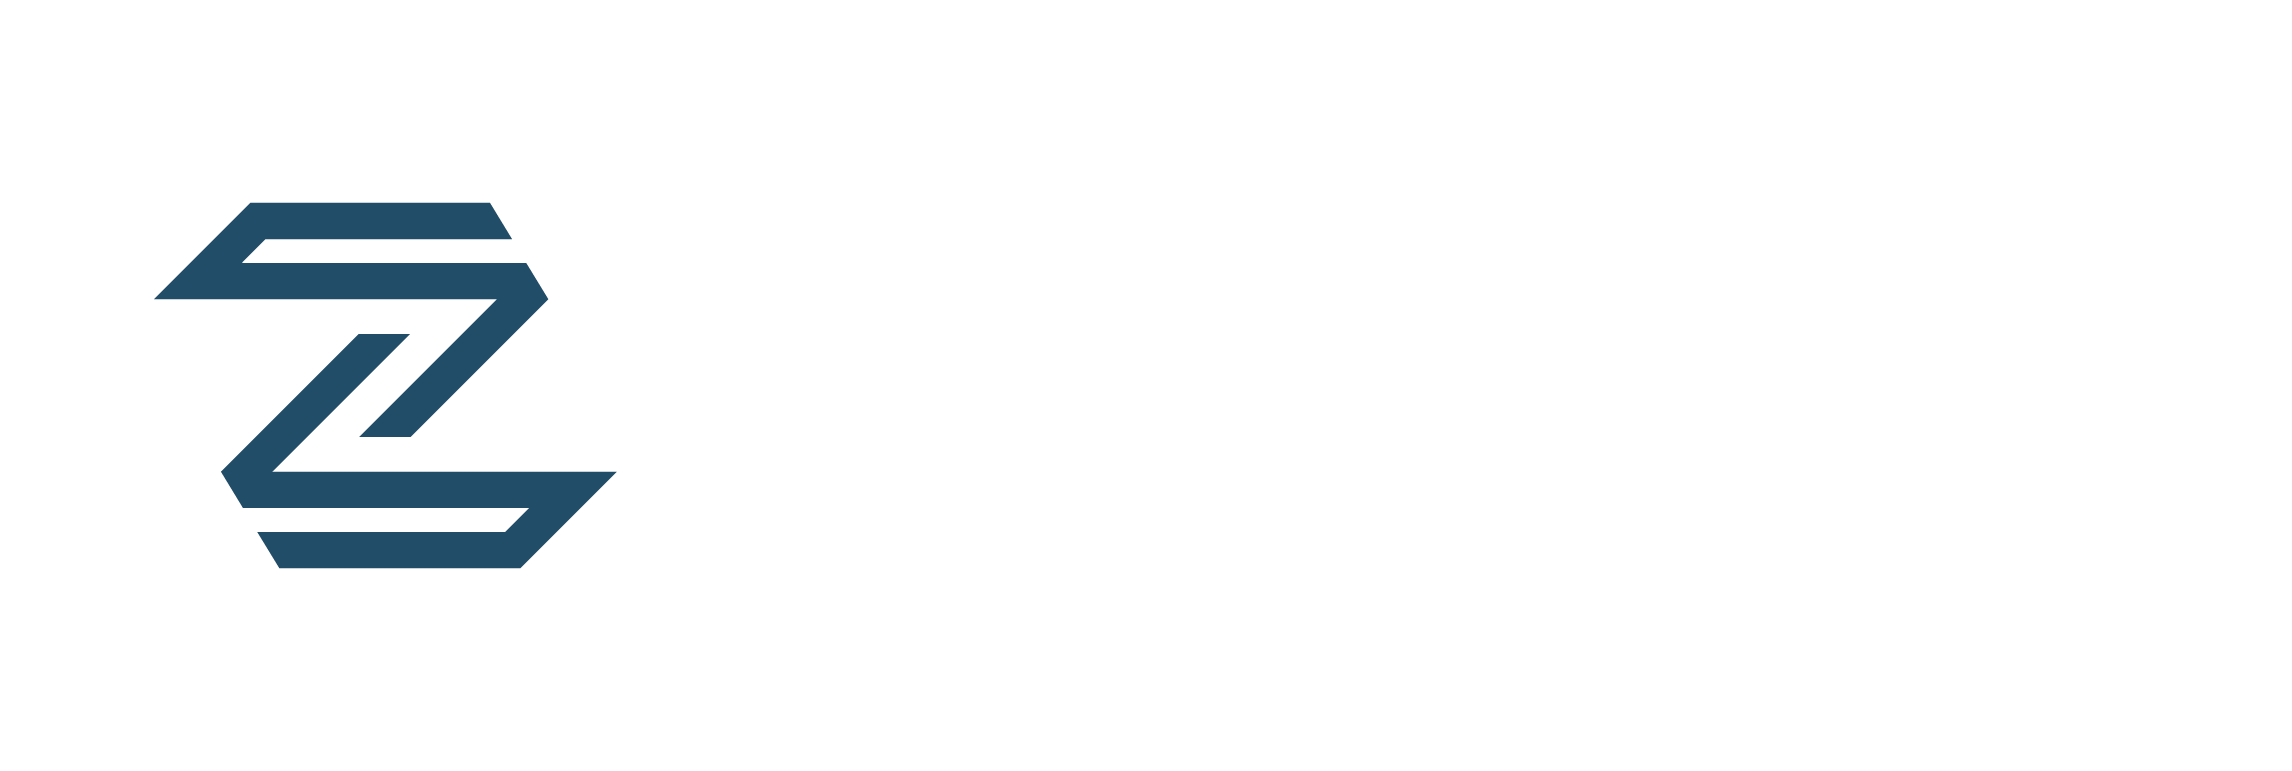 Zeus Films logo